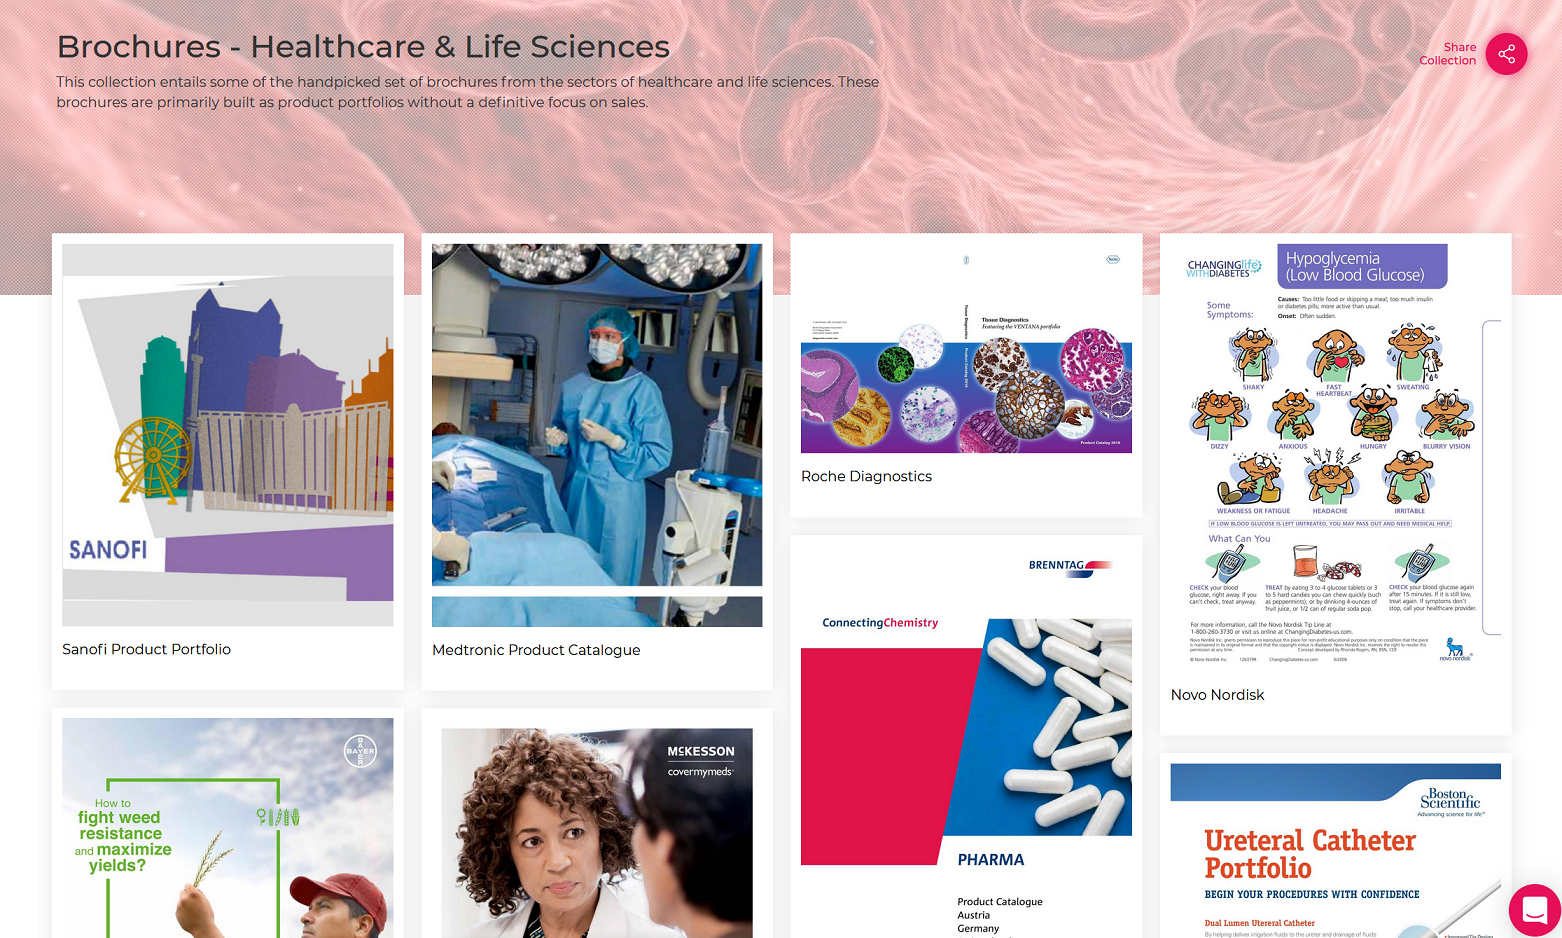 Brochures-Healthcare & Life Sciences Sector